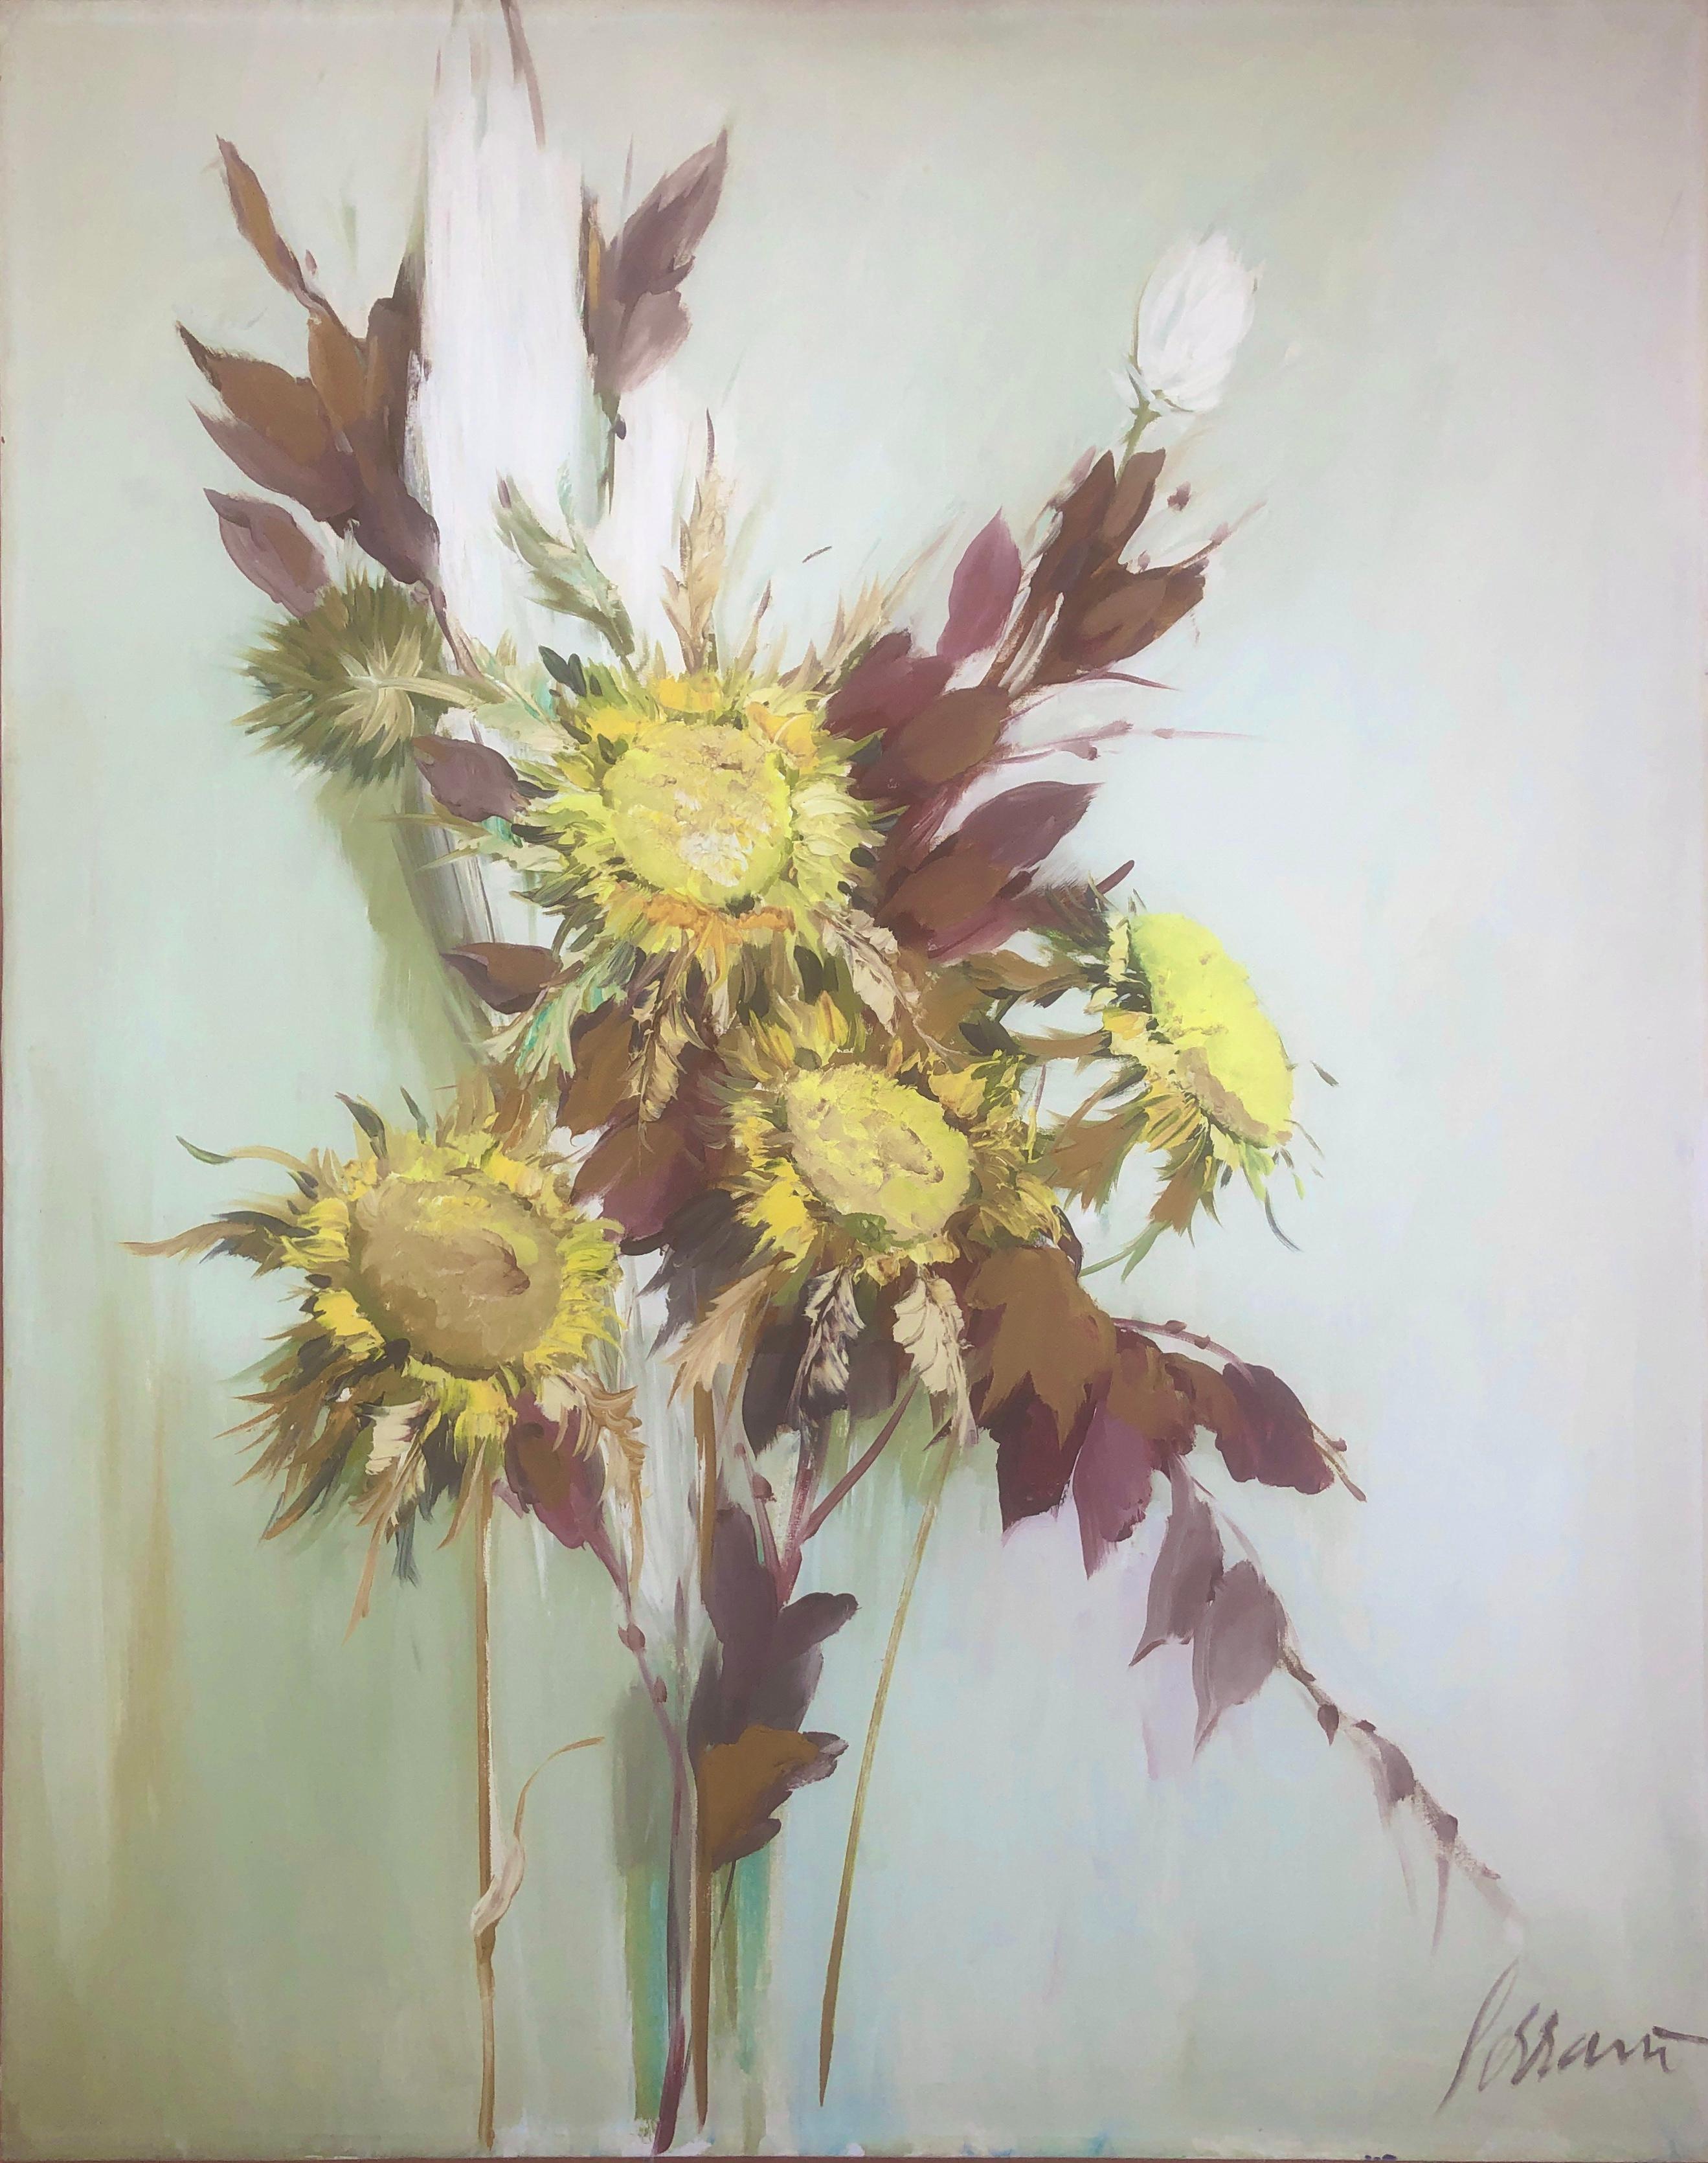 Josep Miquel Serrano Still-Life Painting - Flowers still-life oil on canvas painting